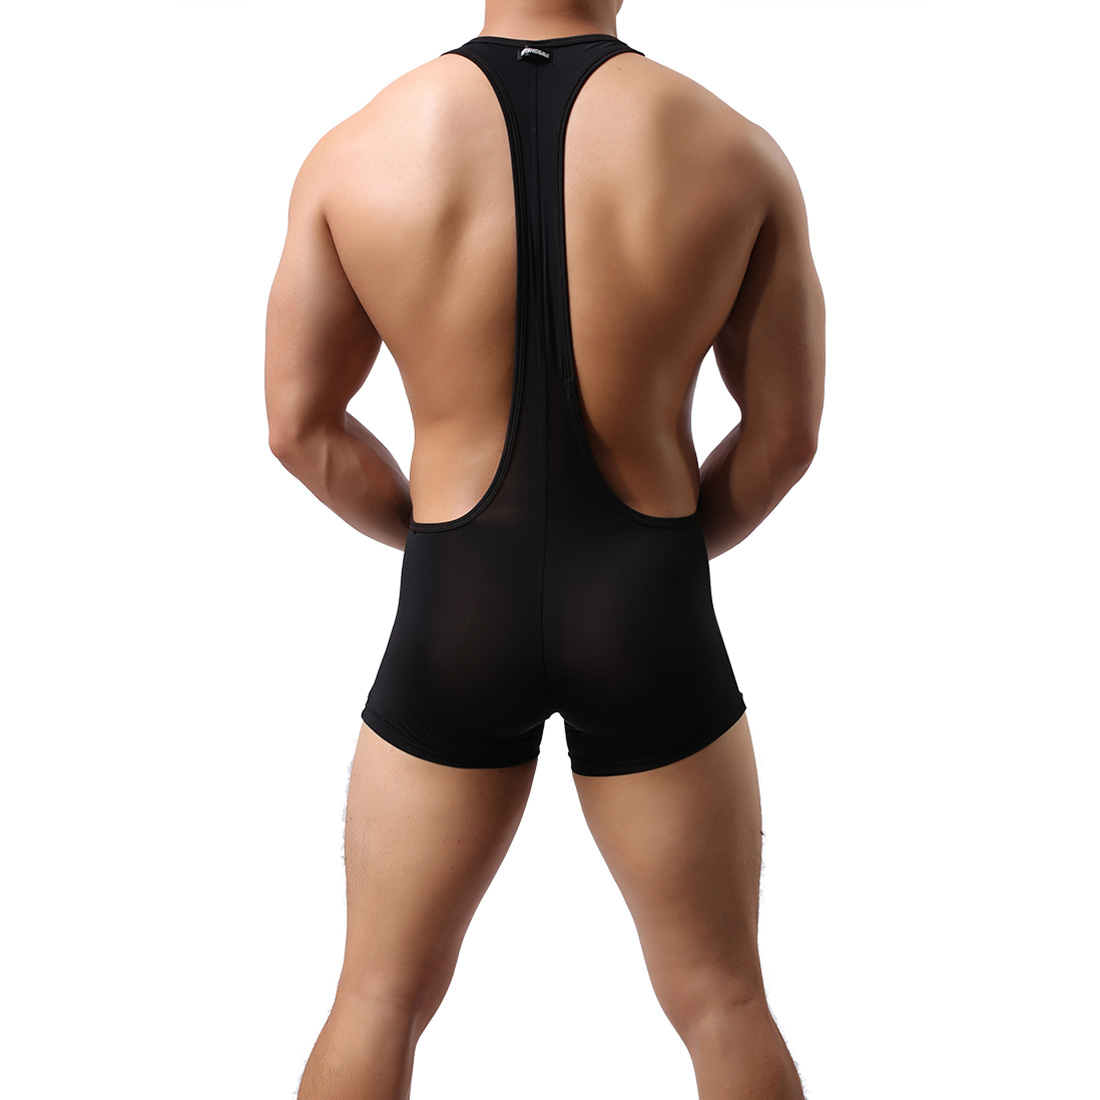 Men's Sexy Lingerie Underwear Sport Fitness One-pieces Swimsuit Wrestling Dress WH41 Black XL